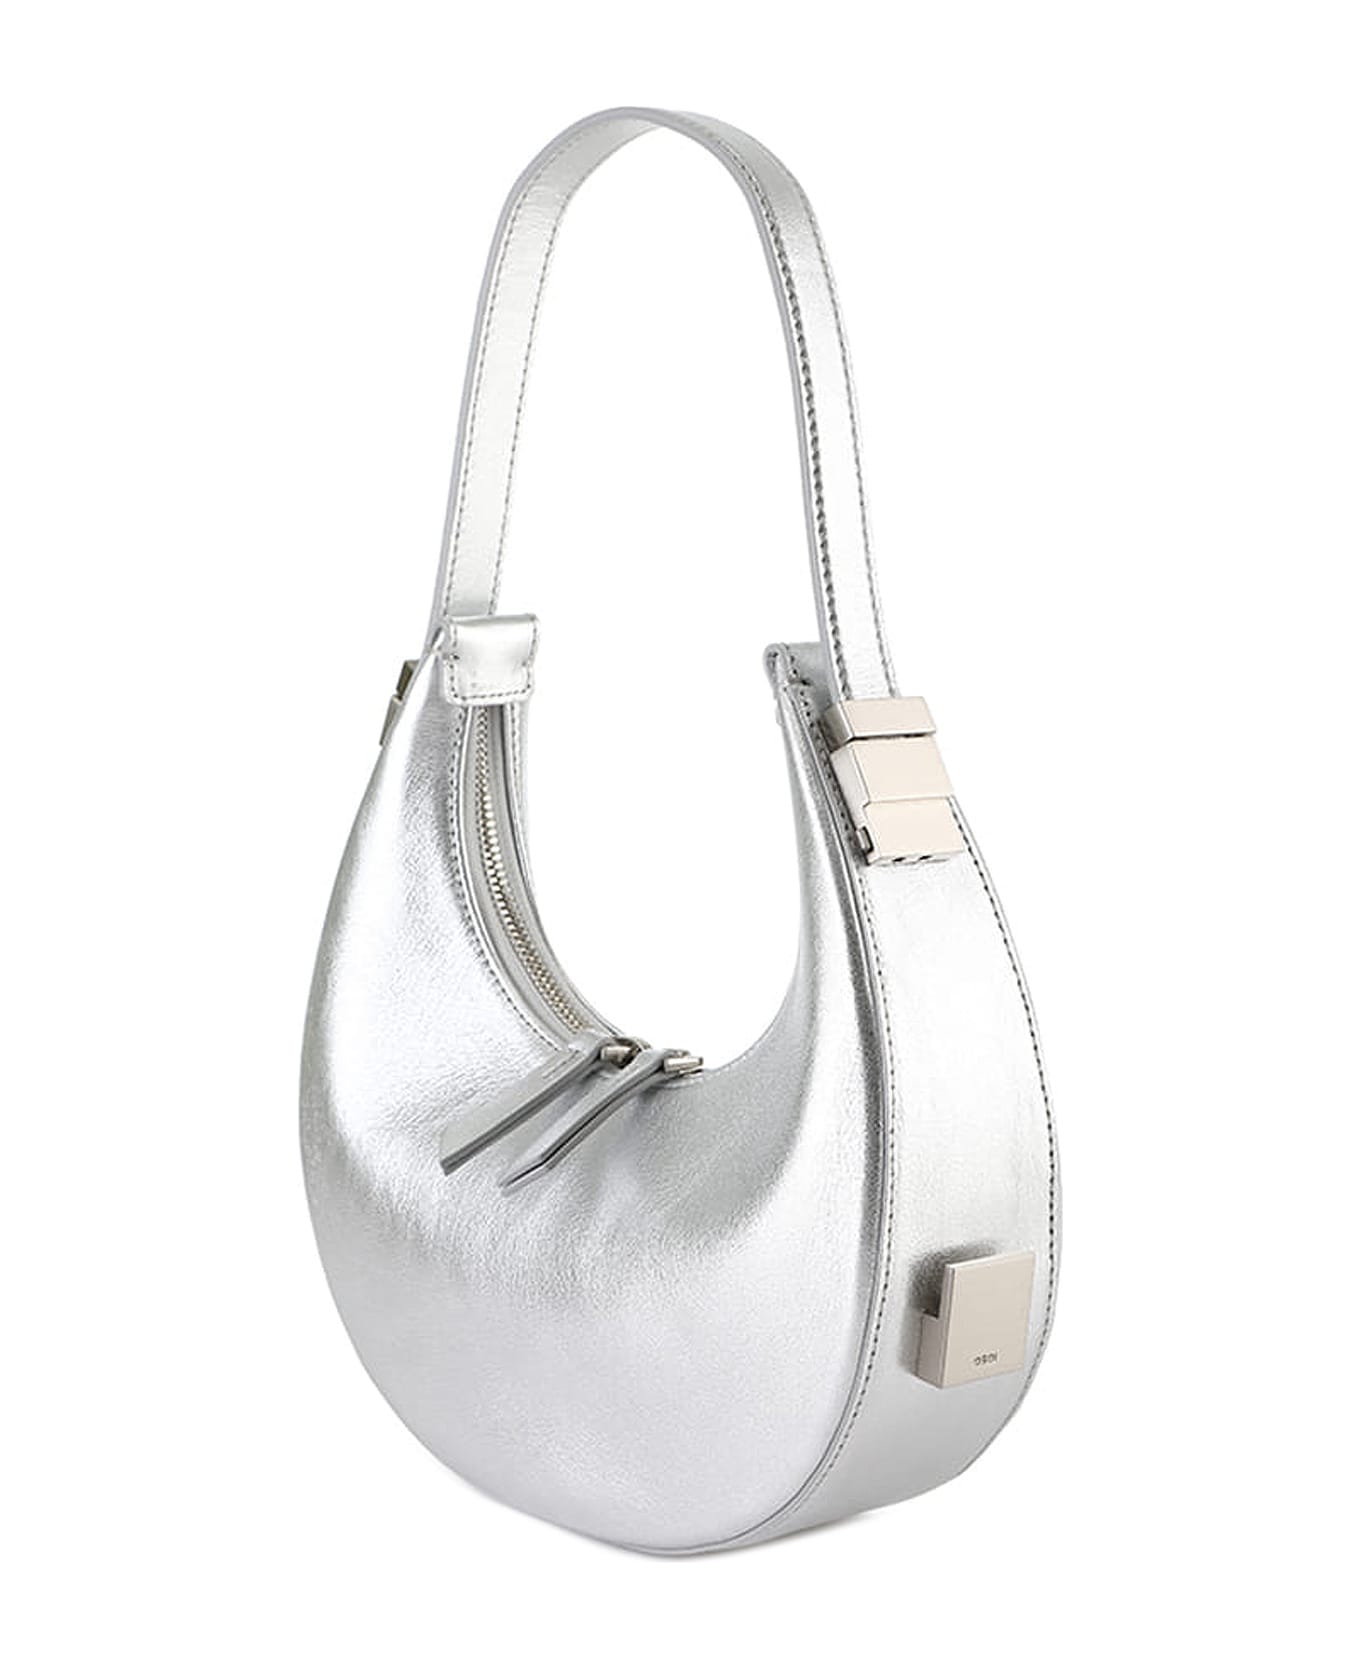 OSOI Toni Mini Shoulder Bag - Silver トートバッグ